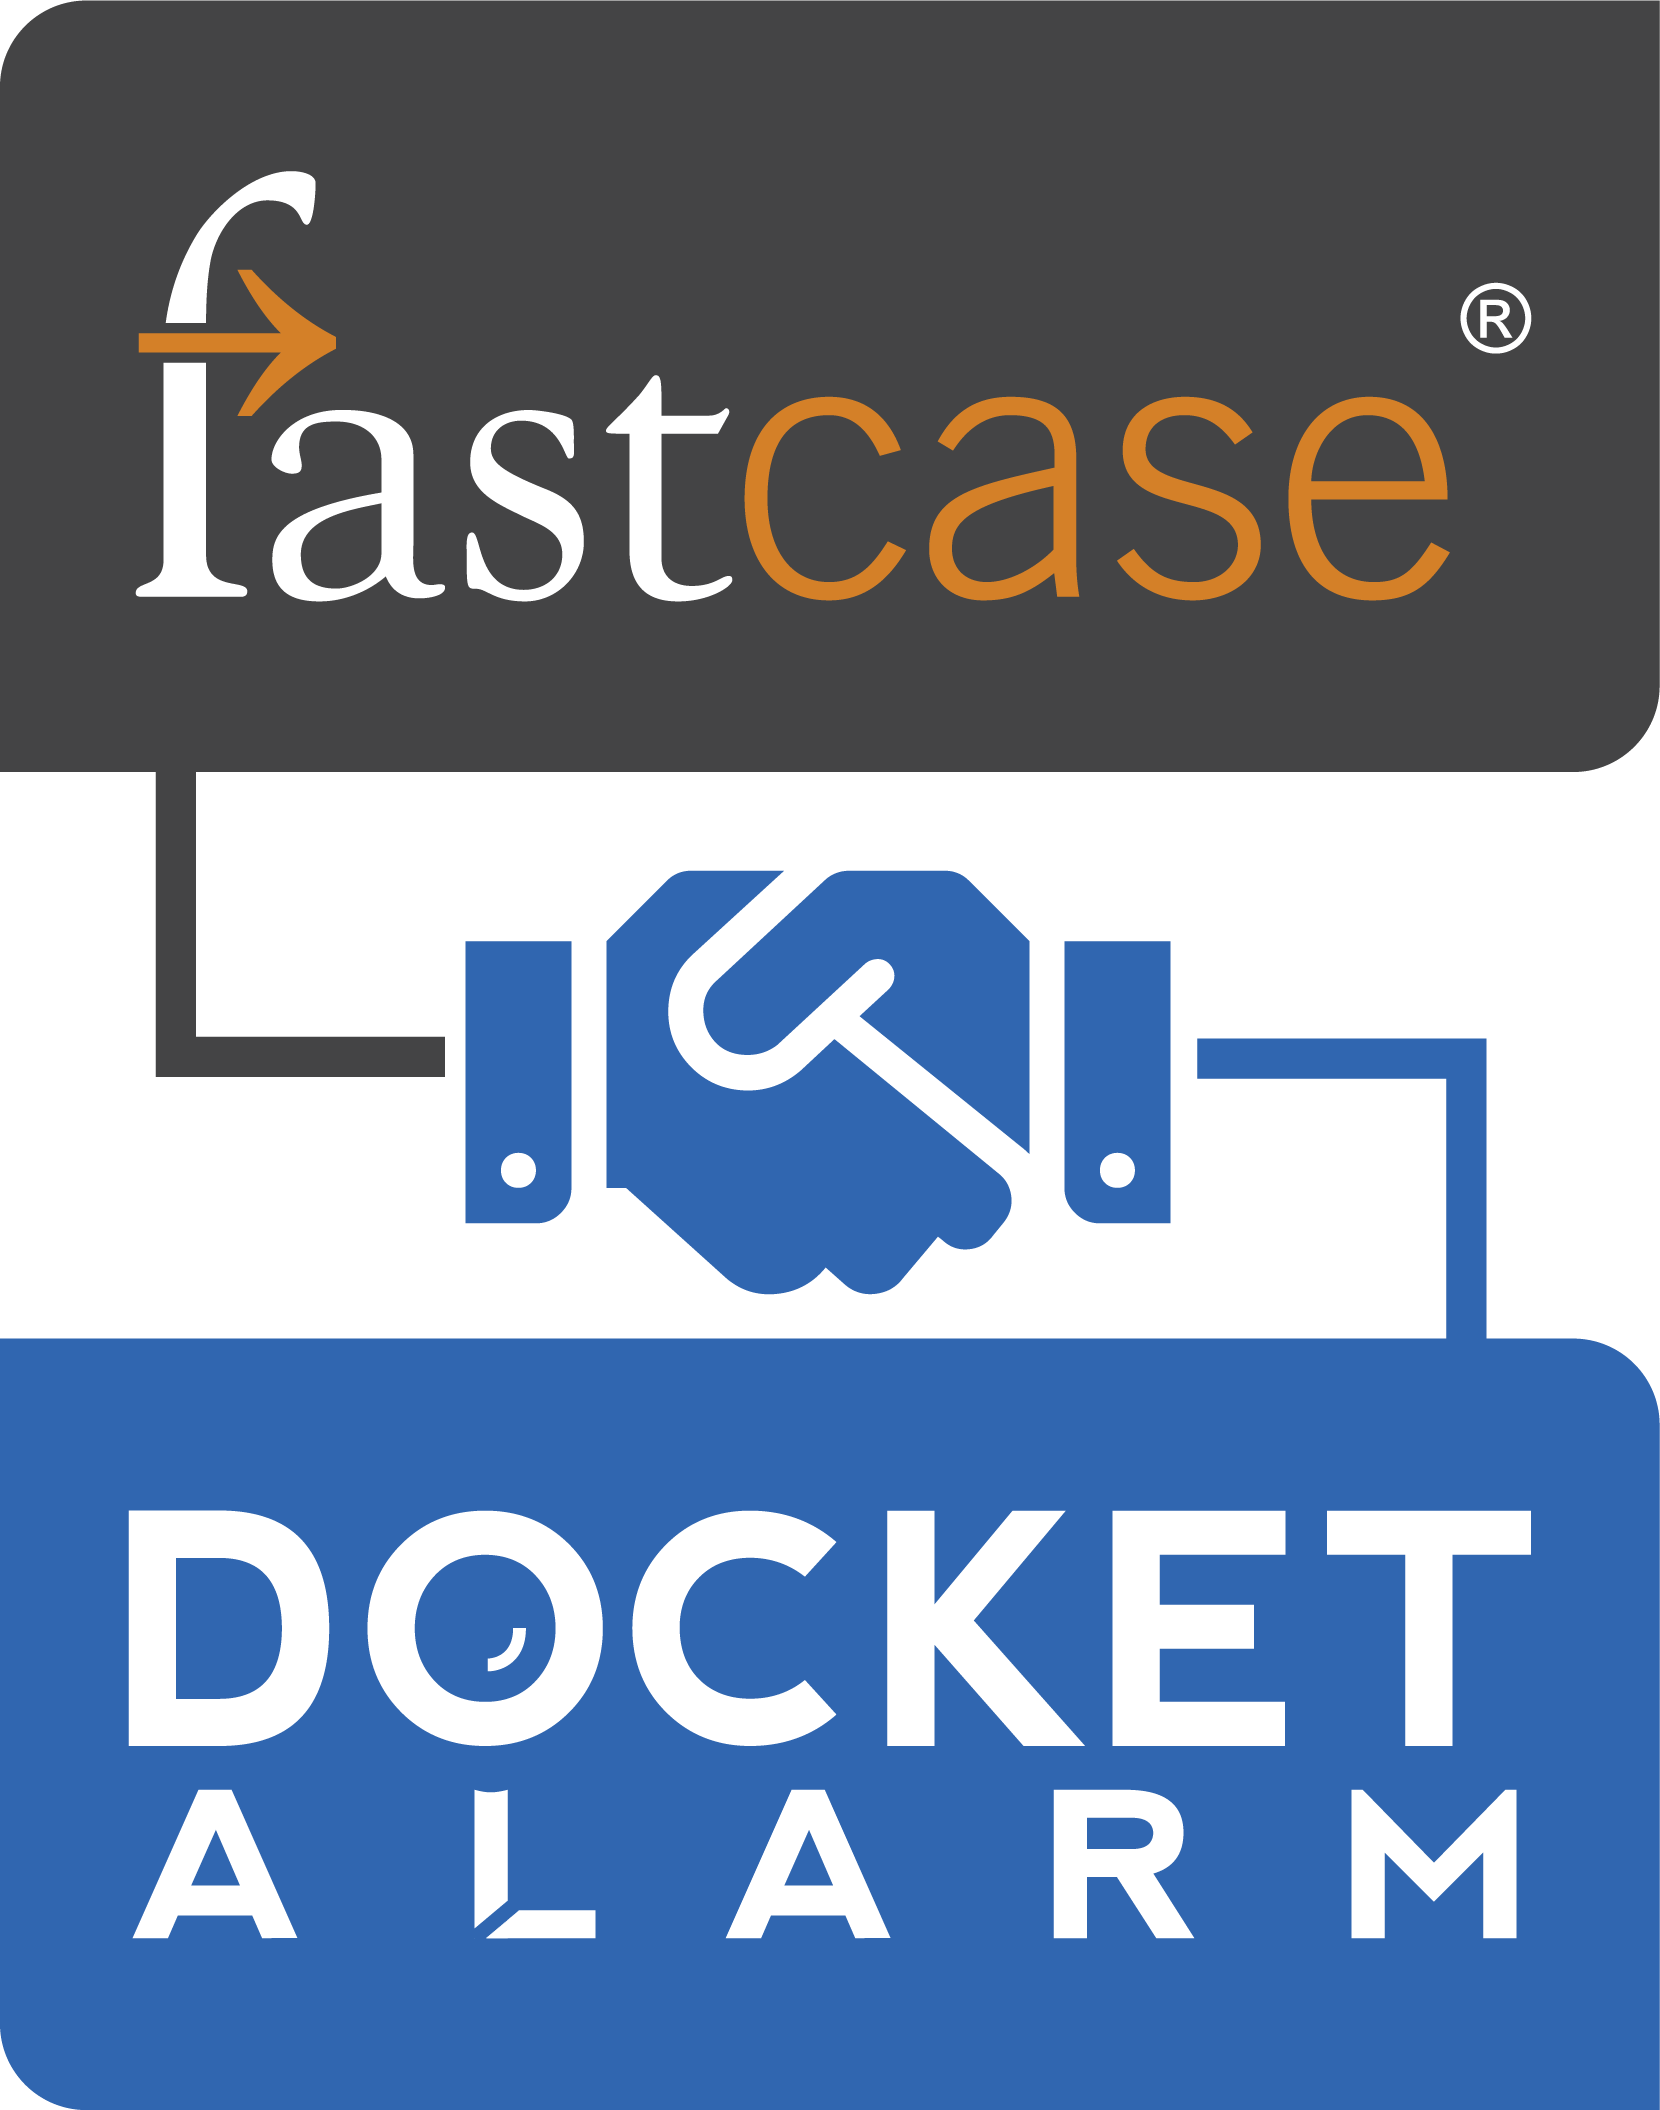 Fastcase and Docket Alarm merger